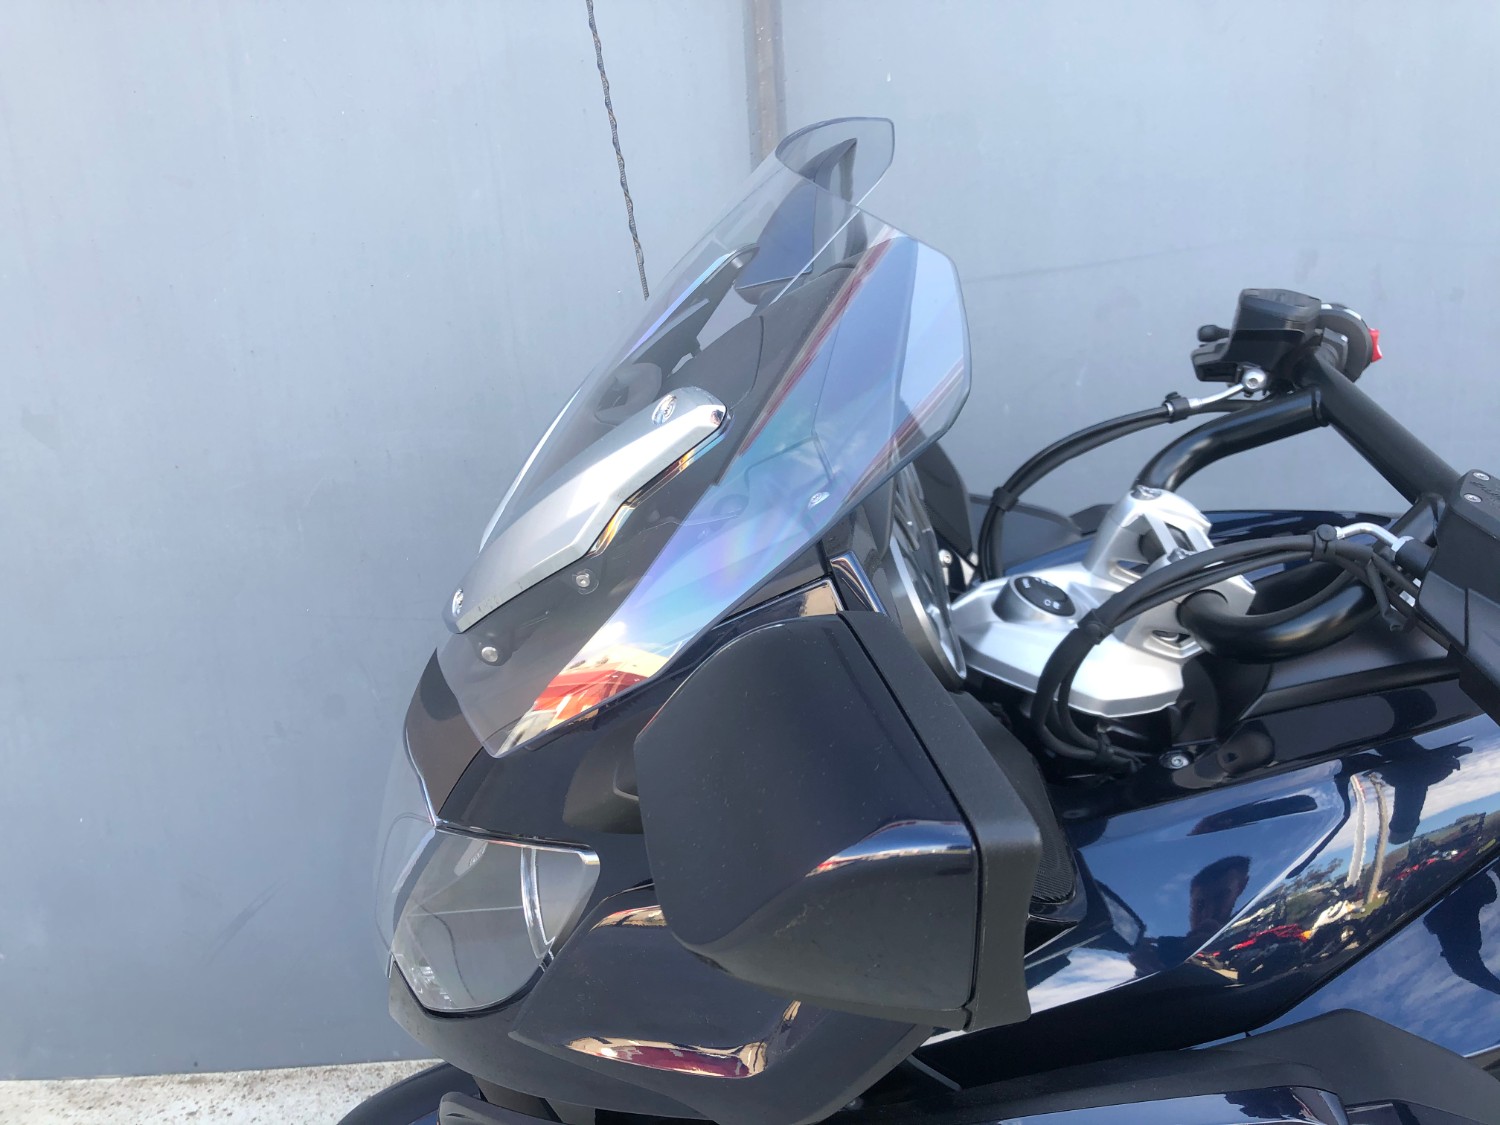 2019 BMW K1600 B Deluxe Motorcycle Image 15